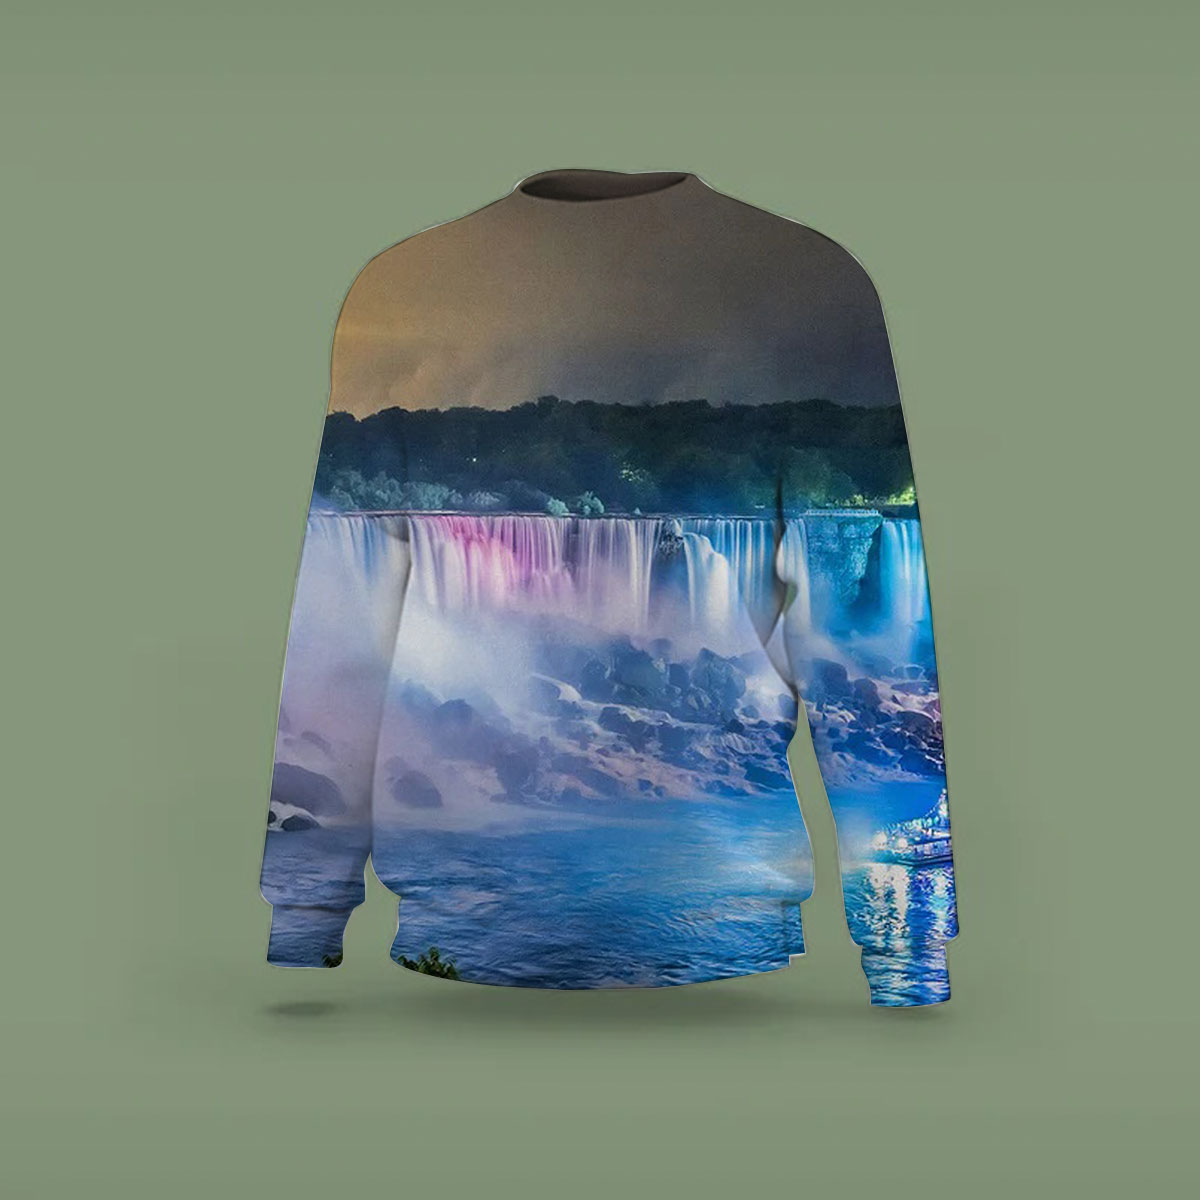 Niagara Falls by Night Sweatshirt